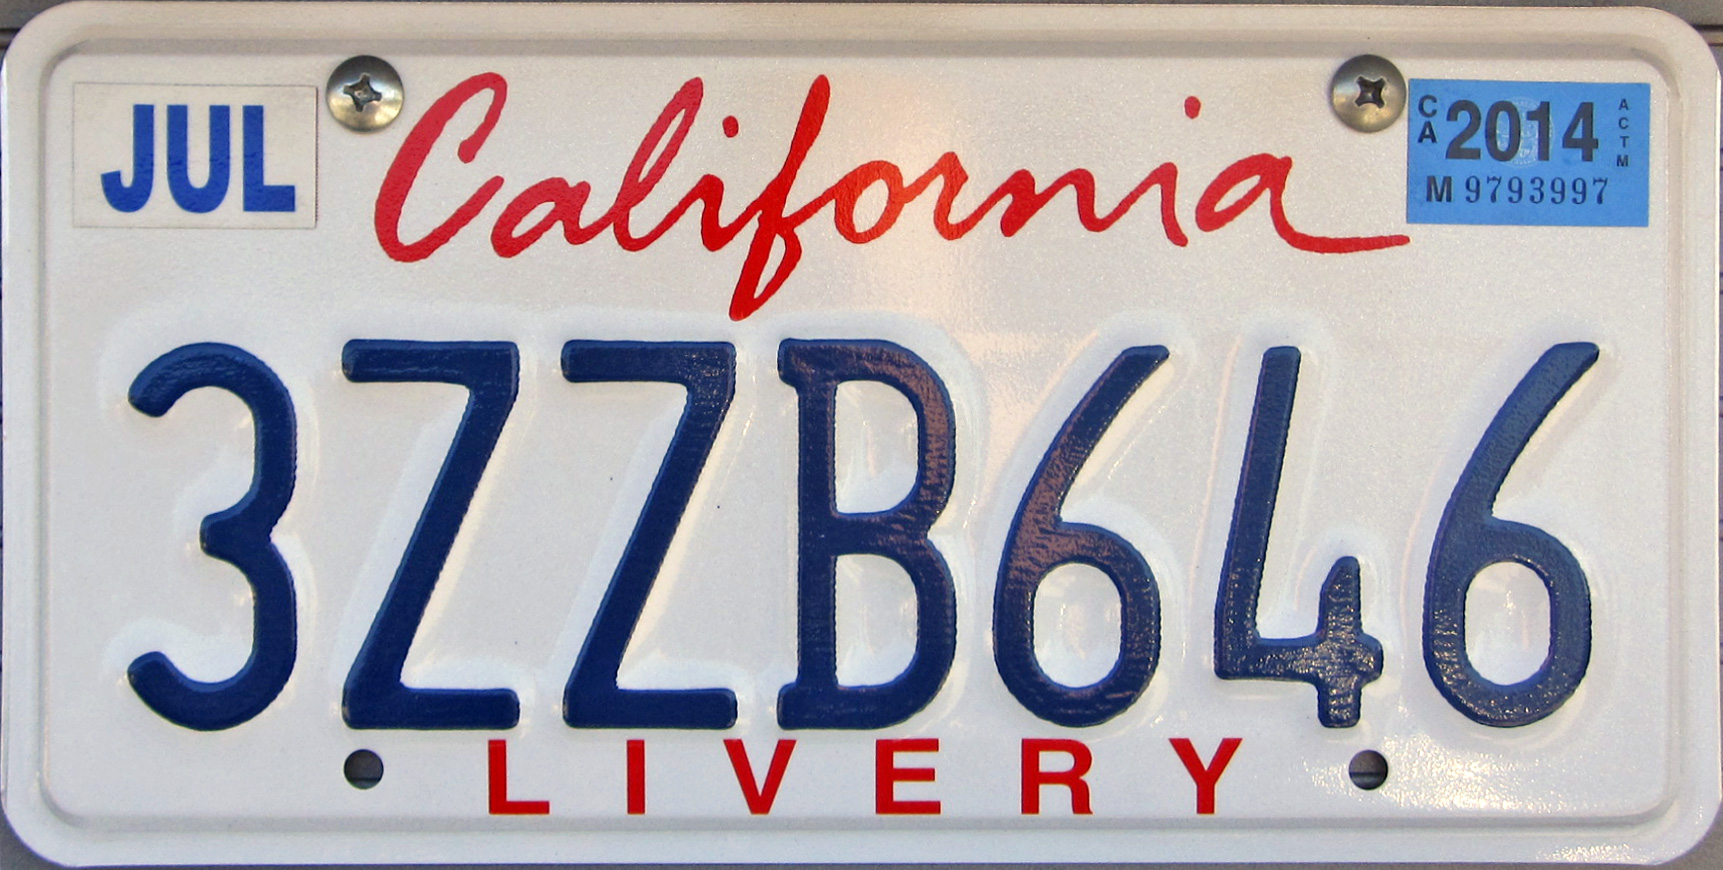 Car license. Калифорнийский номерной знак. Ретро американский номерной знак. Номерные знаки Калифорнии. Автомобильные номера штата Калифорния.